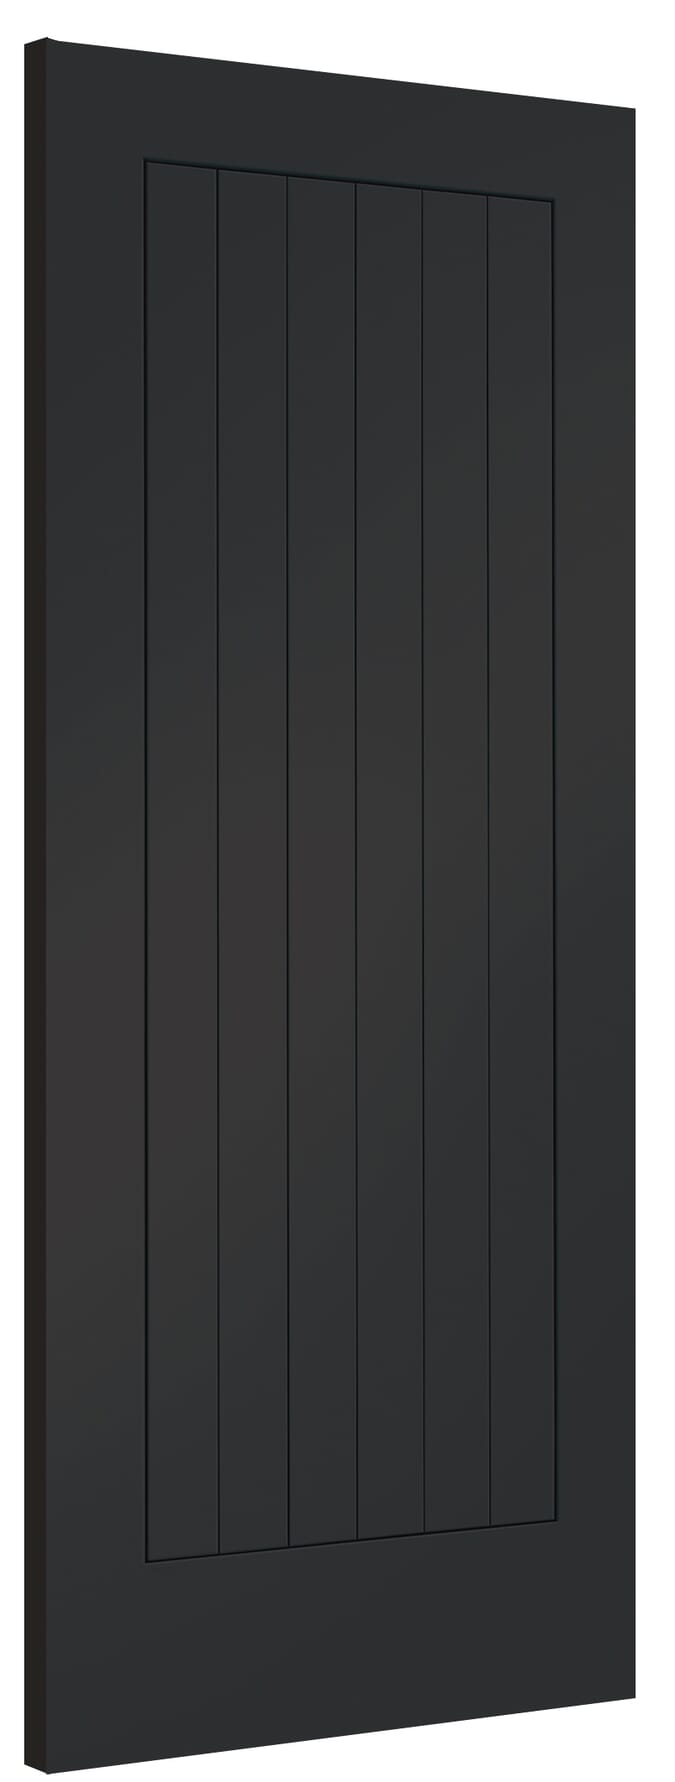 762x1981x44mm (30") Suffolk Cosmos Black Internal Doors